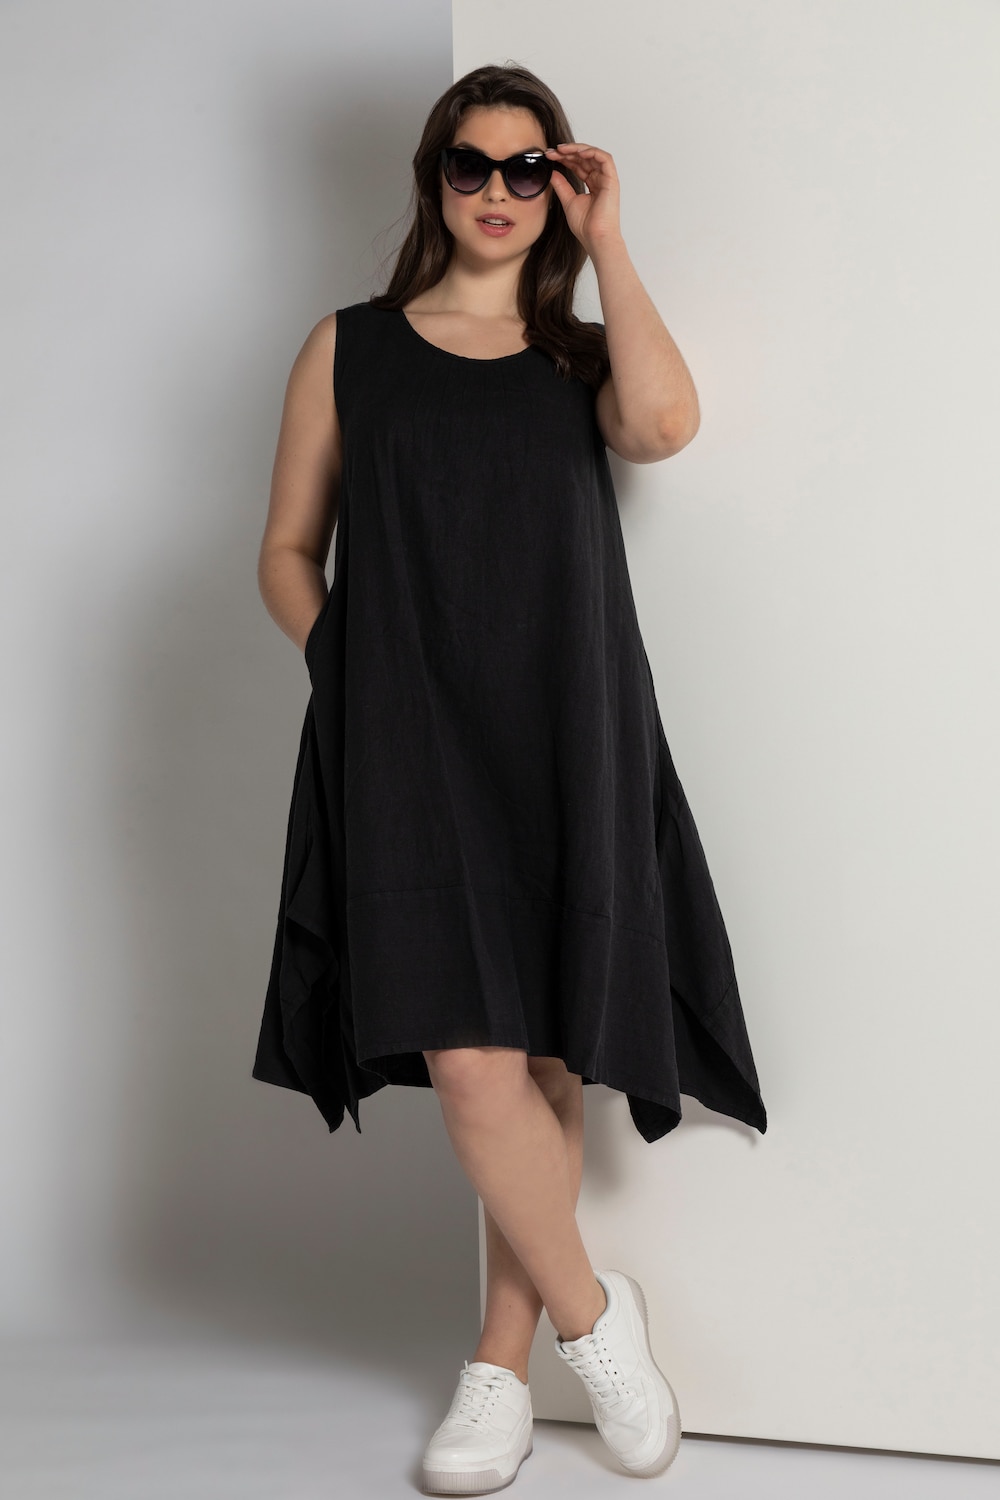 Plus Size Crochet Inset Pointed Hem Linen Blend Tank Dress, Woman, black, size: 28/30, linen/viscose, Ulla Popken